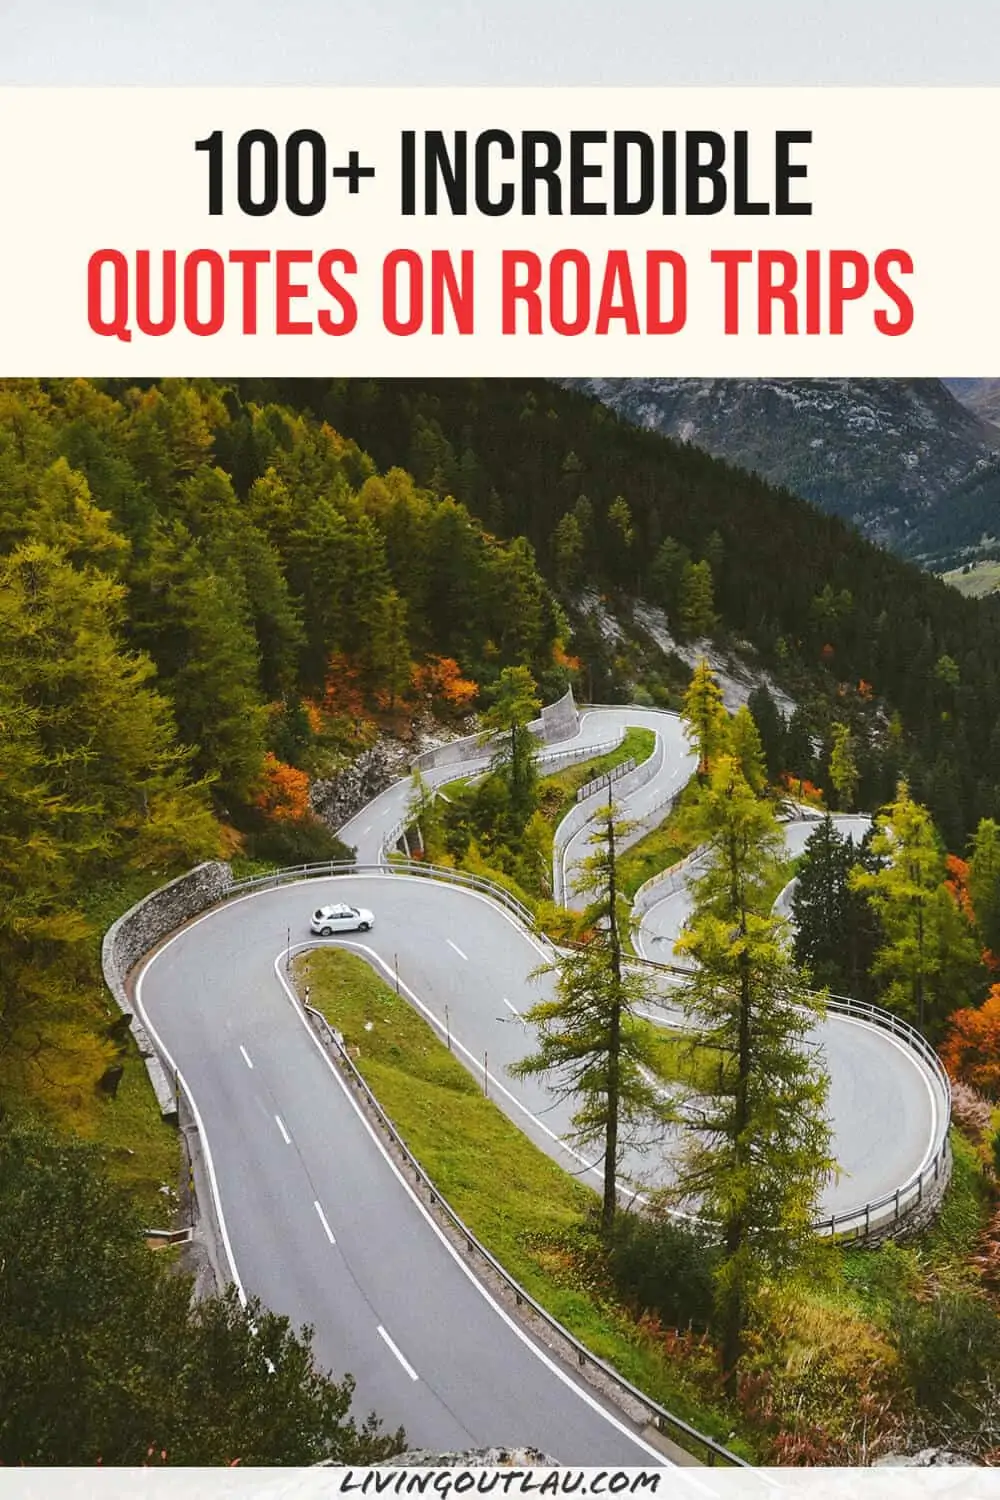 Road Trip Sayings Pinterest